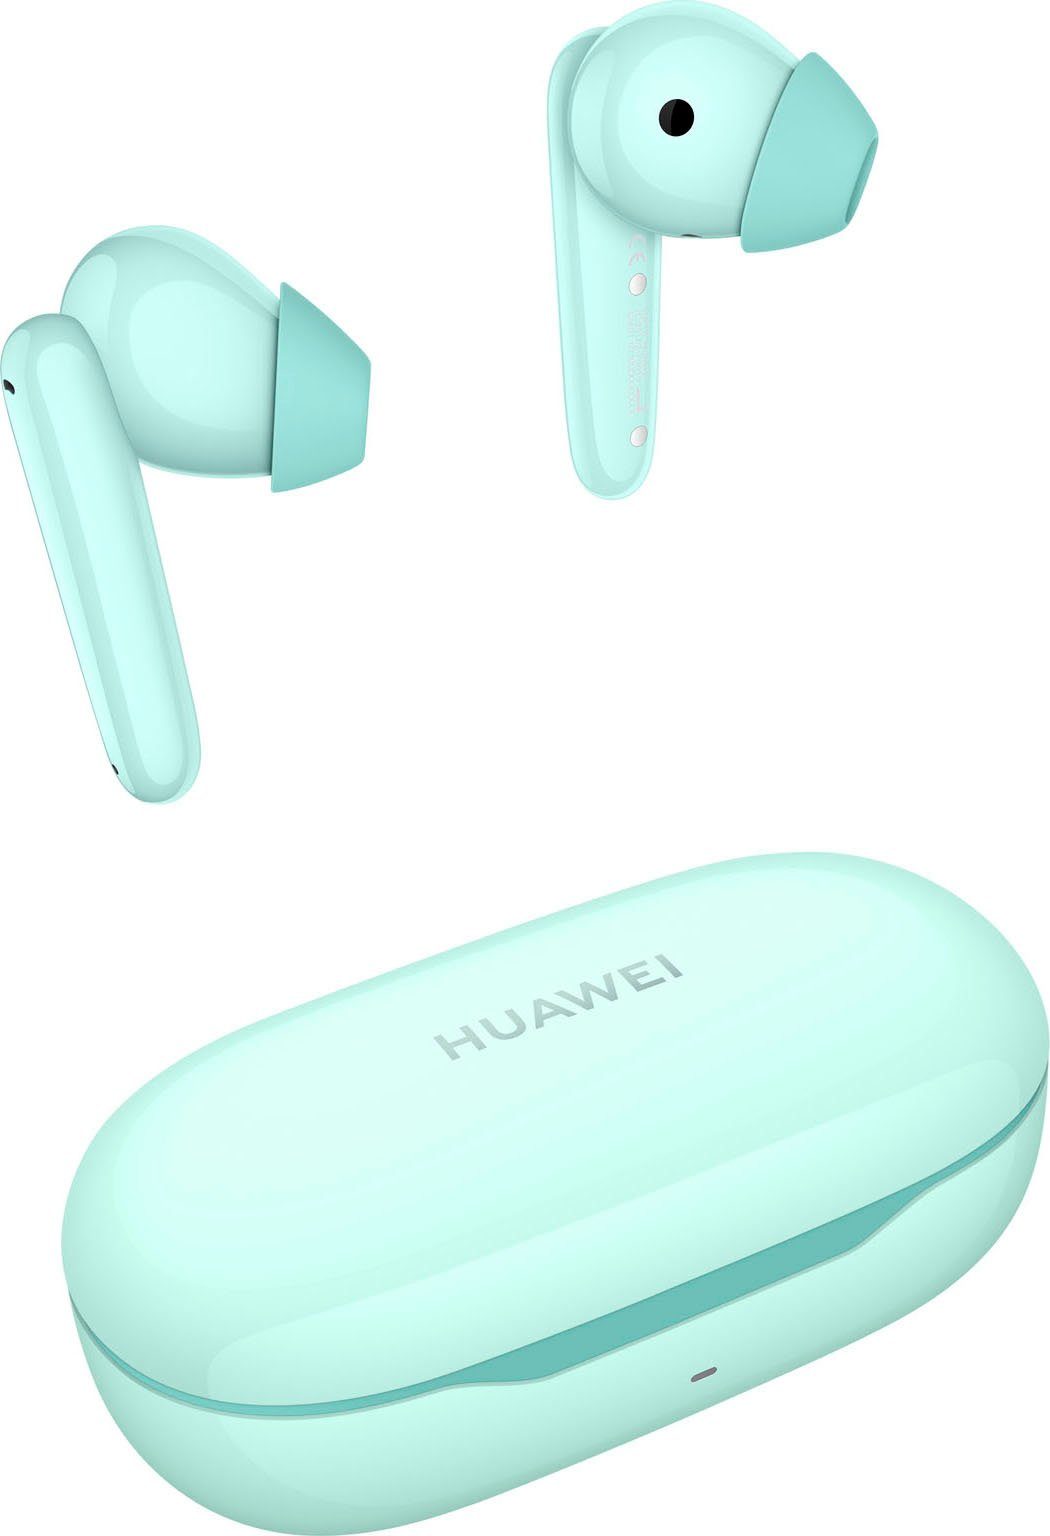 FreeBuds Lange Blau Huawei (Premium-Design, In-Ear-Kopfhörer Akkulaufzeit) Kristallklarer Sound, SE wireless